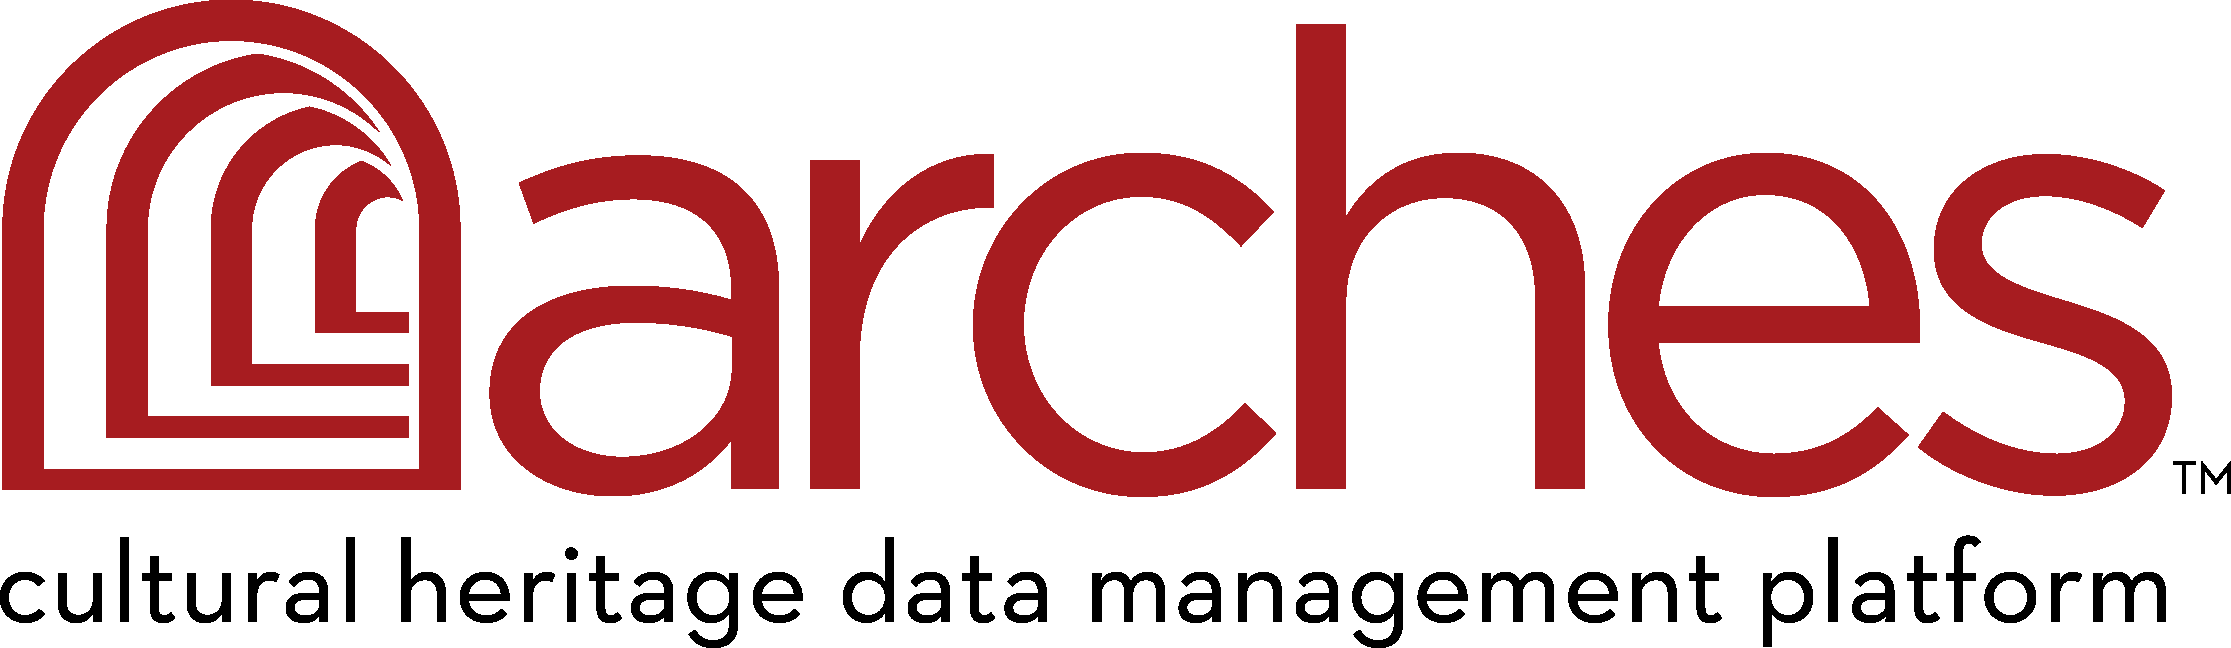 Arches logo. Text reads: Arches TM cultural heritage data management platform